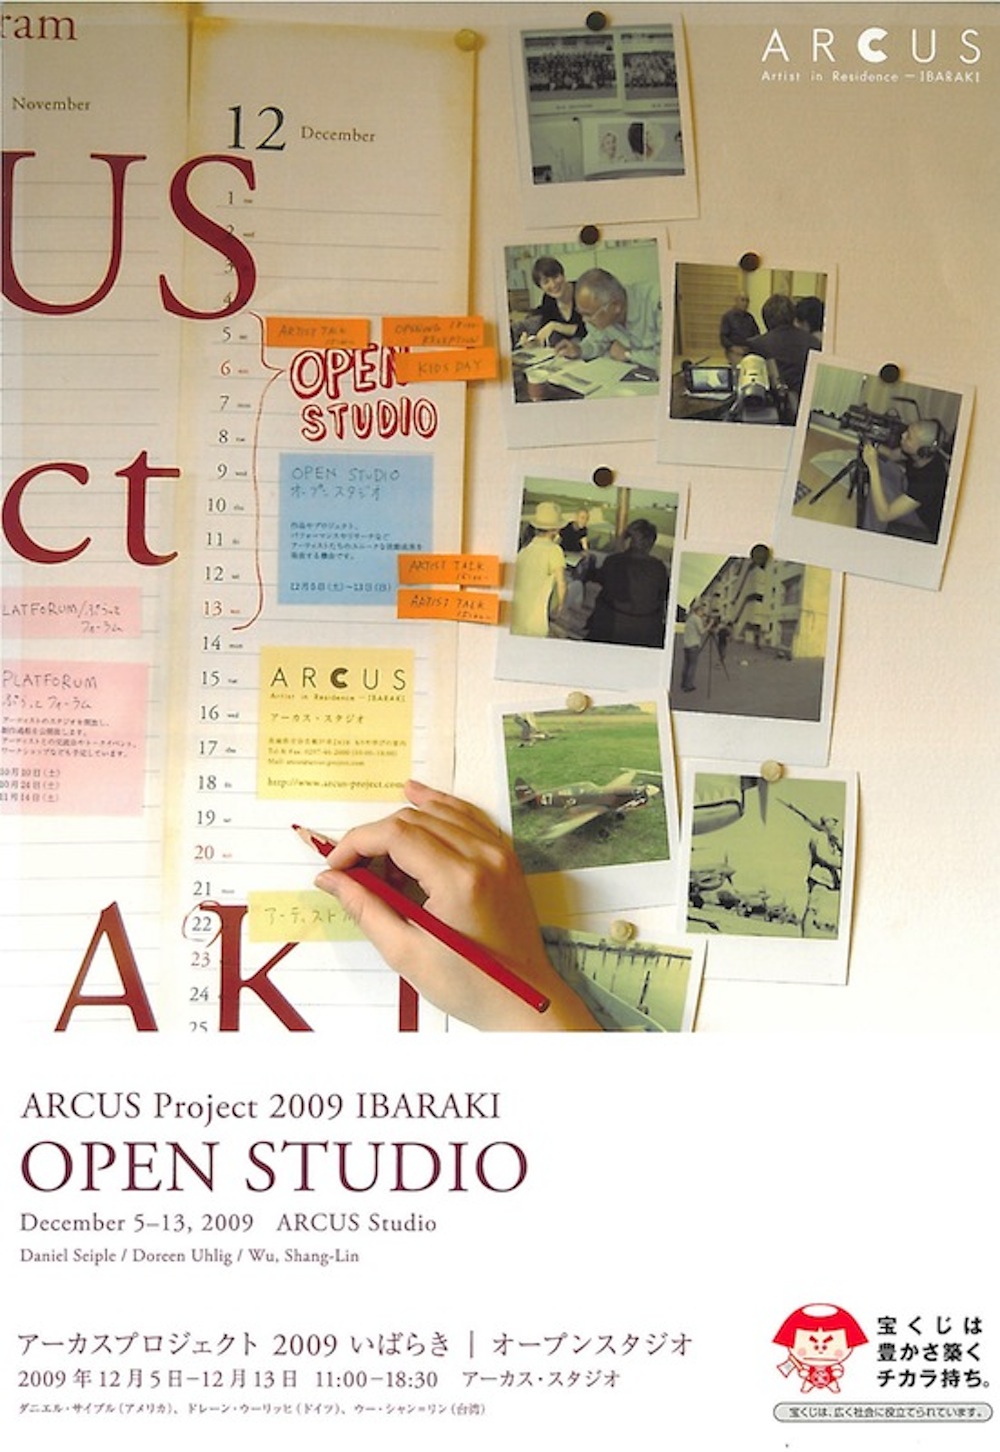 ARCUSチラシ 2009 アーカスプロジェクト オープンスタジオ